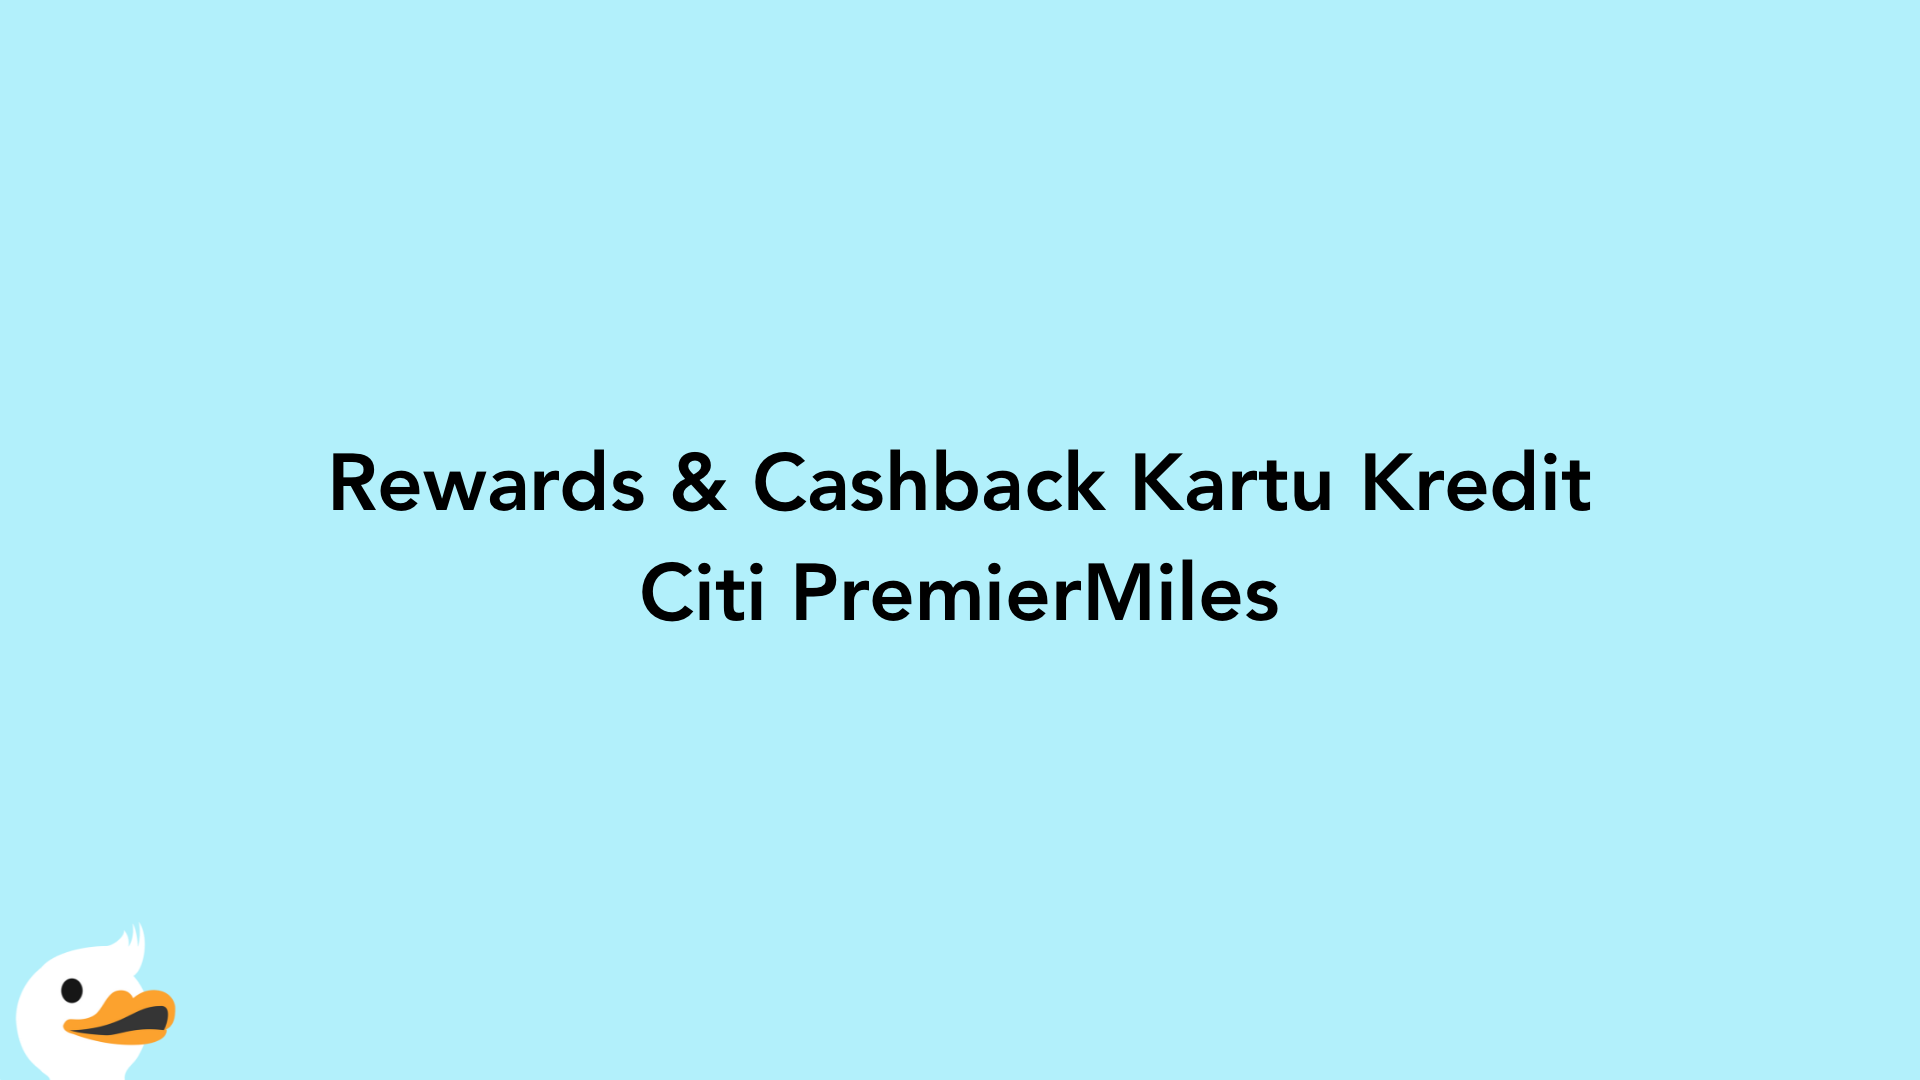 Rewards & Cashback Kartu Kredit Citi PremierMiles